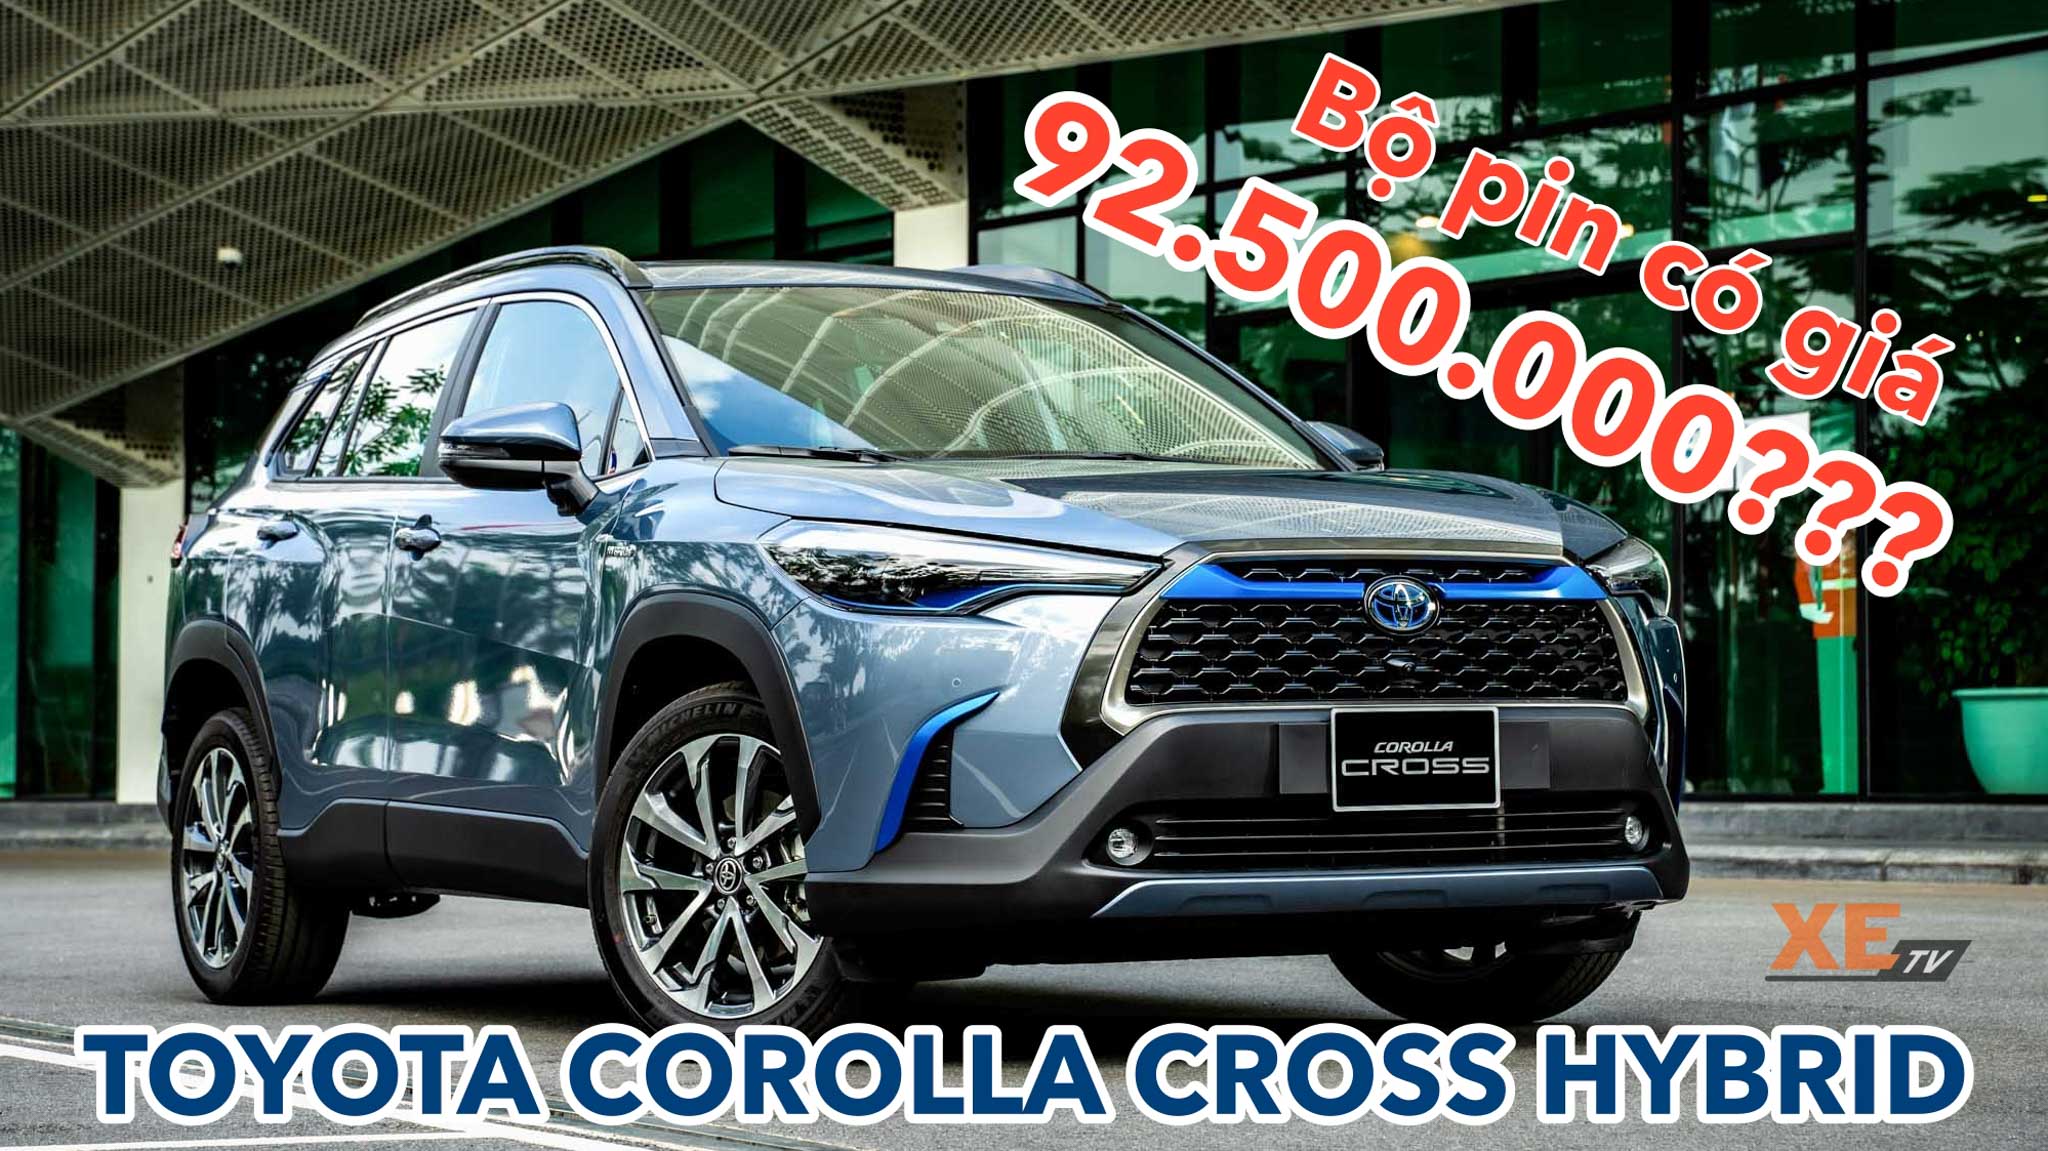 XEtv-Toyota-Corolla-Cross-Hybrid-Battery-Thumbnail-1.jpg